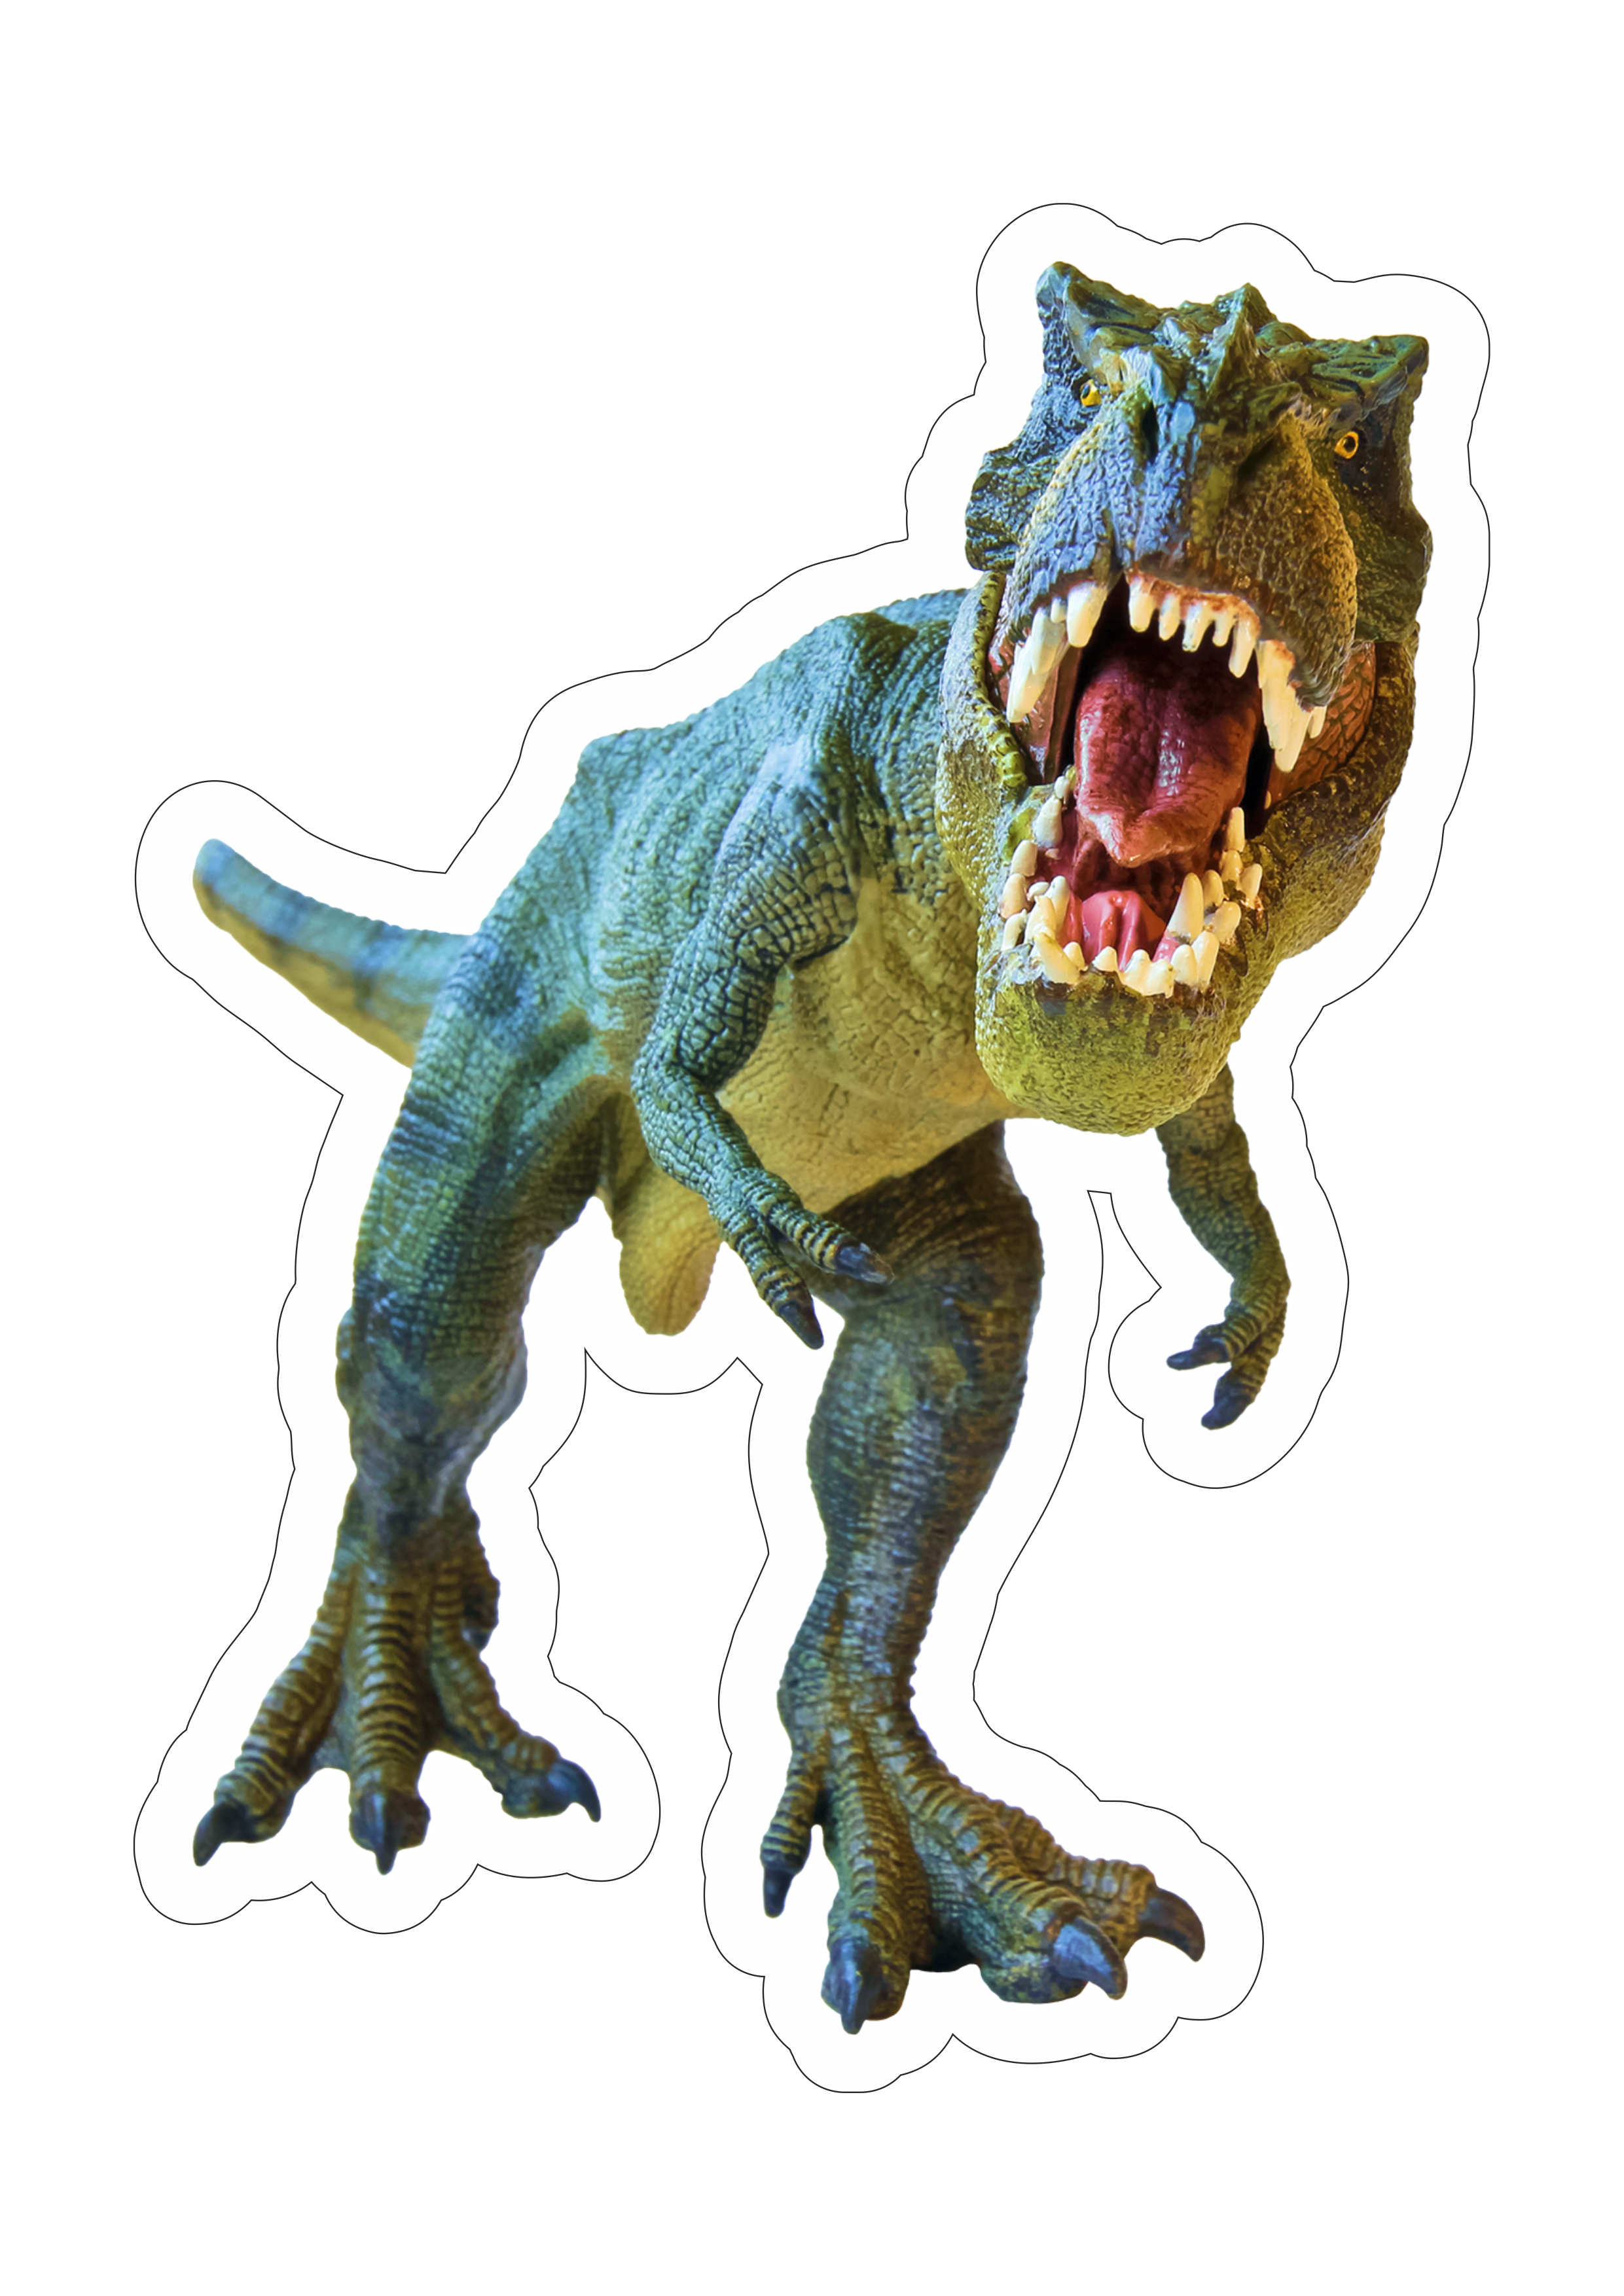 Jurassic Park tiranossauro rex carnívoro monstro assustador imagem sem fundo free png